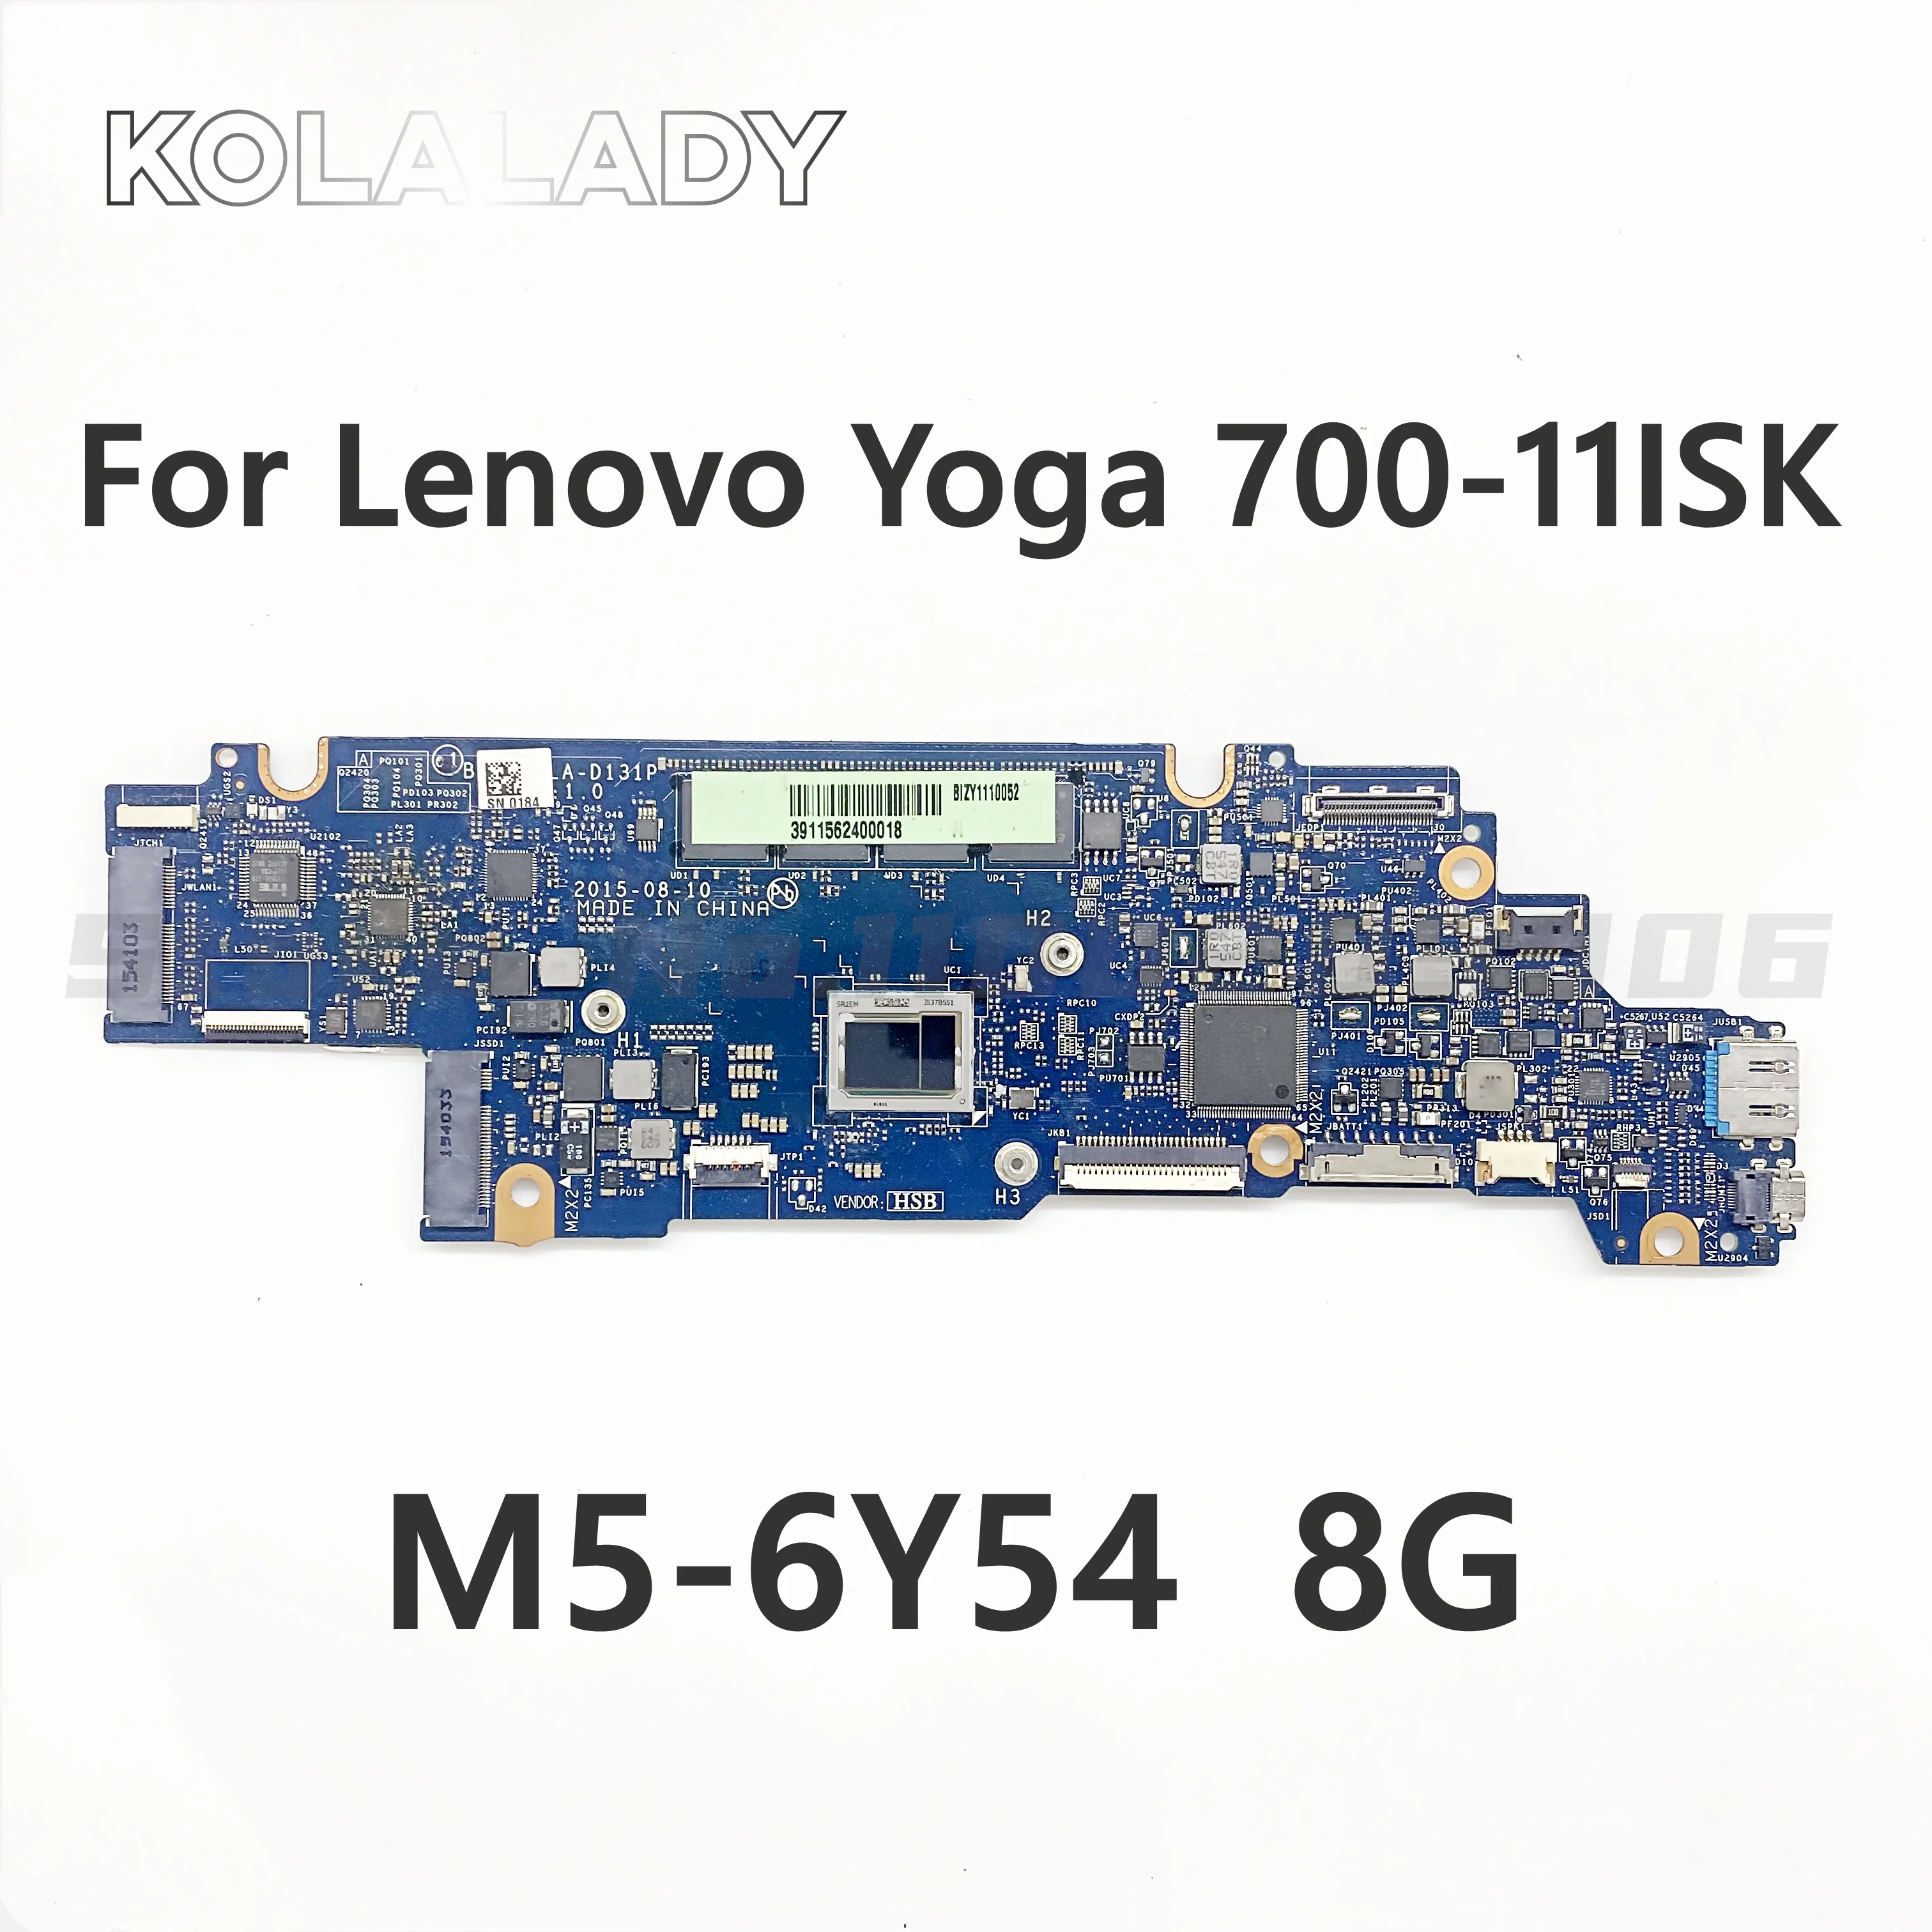 LA-D131P Laptop Anakart Lenovo Yoga 700-11ISK Anakart 700-11 W / M5-6Y54 CPU RAM 8G 5B20K57006 %100 % tam test